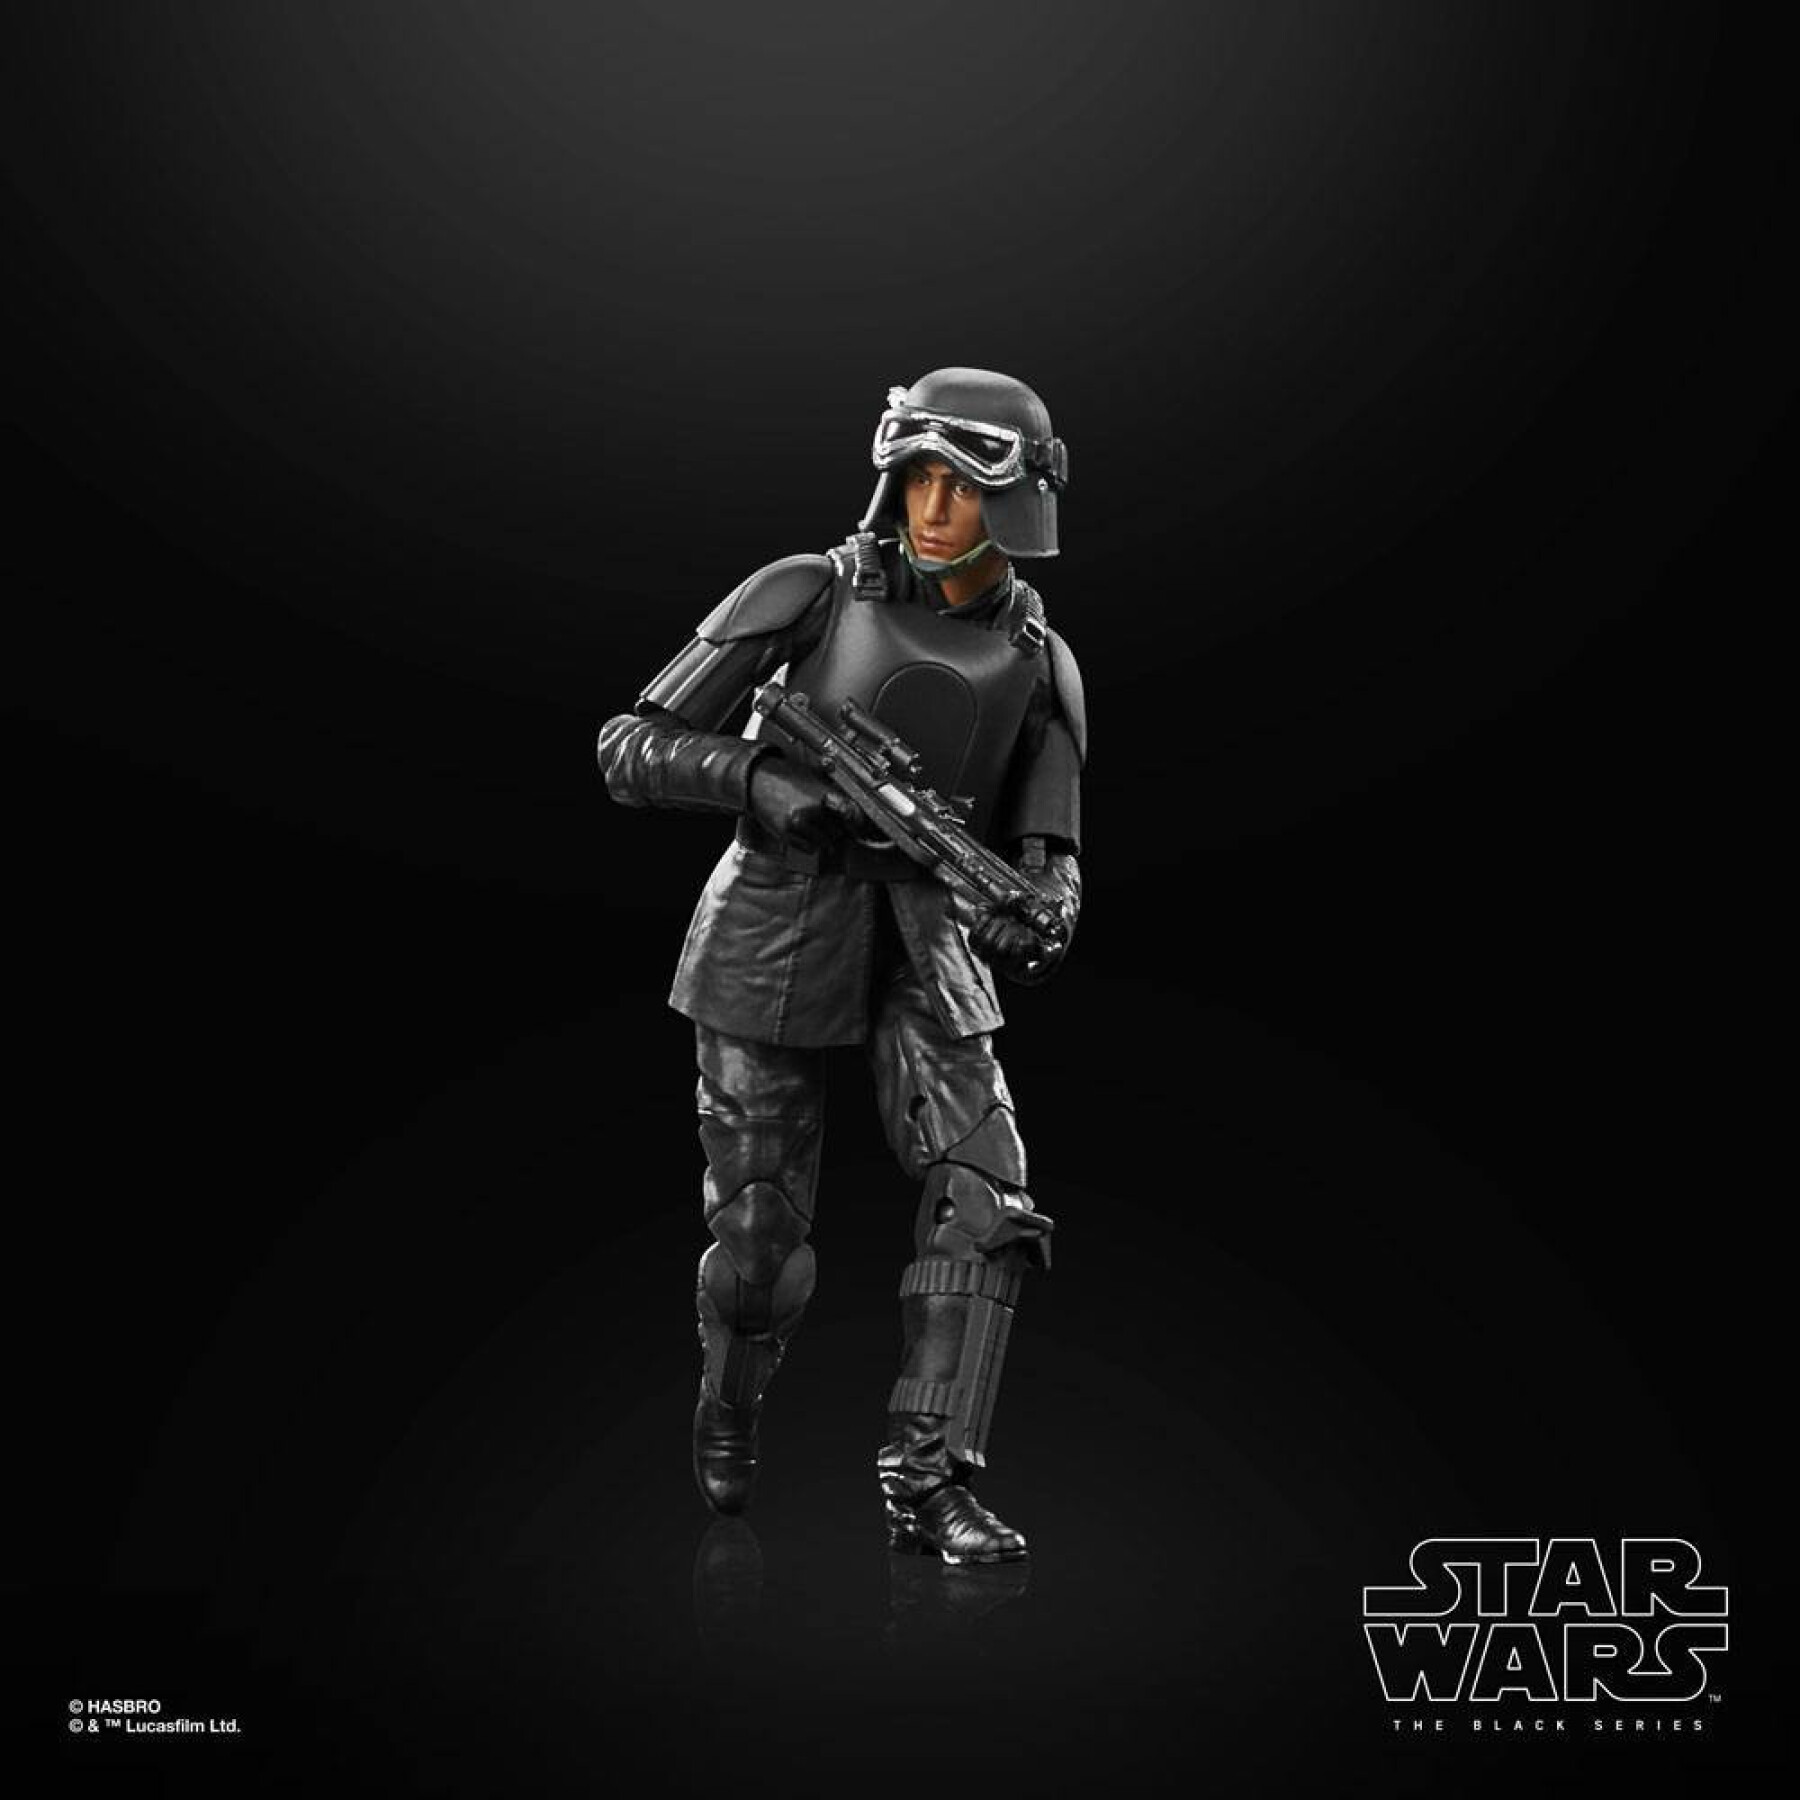 Figurina ufficiale imperiale ferrix Hasbro Star Wars: Andor Black Series